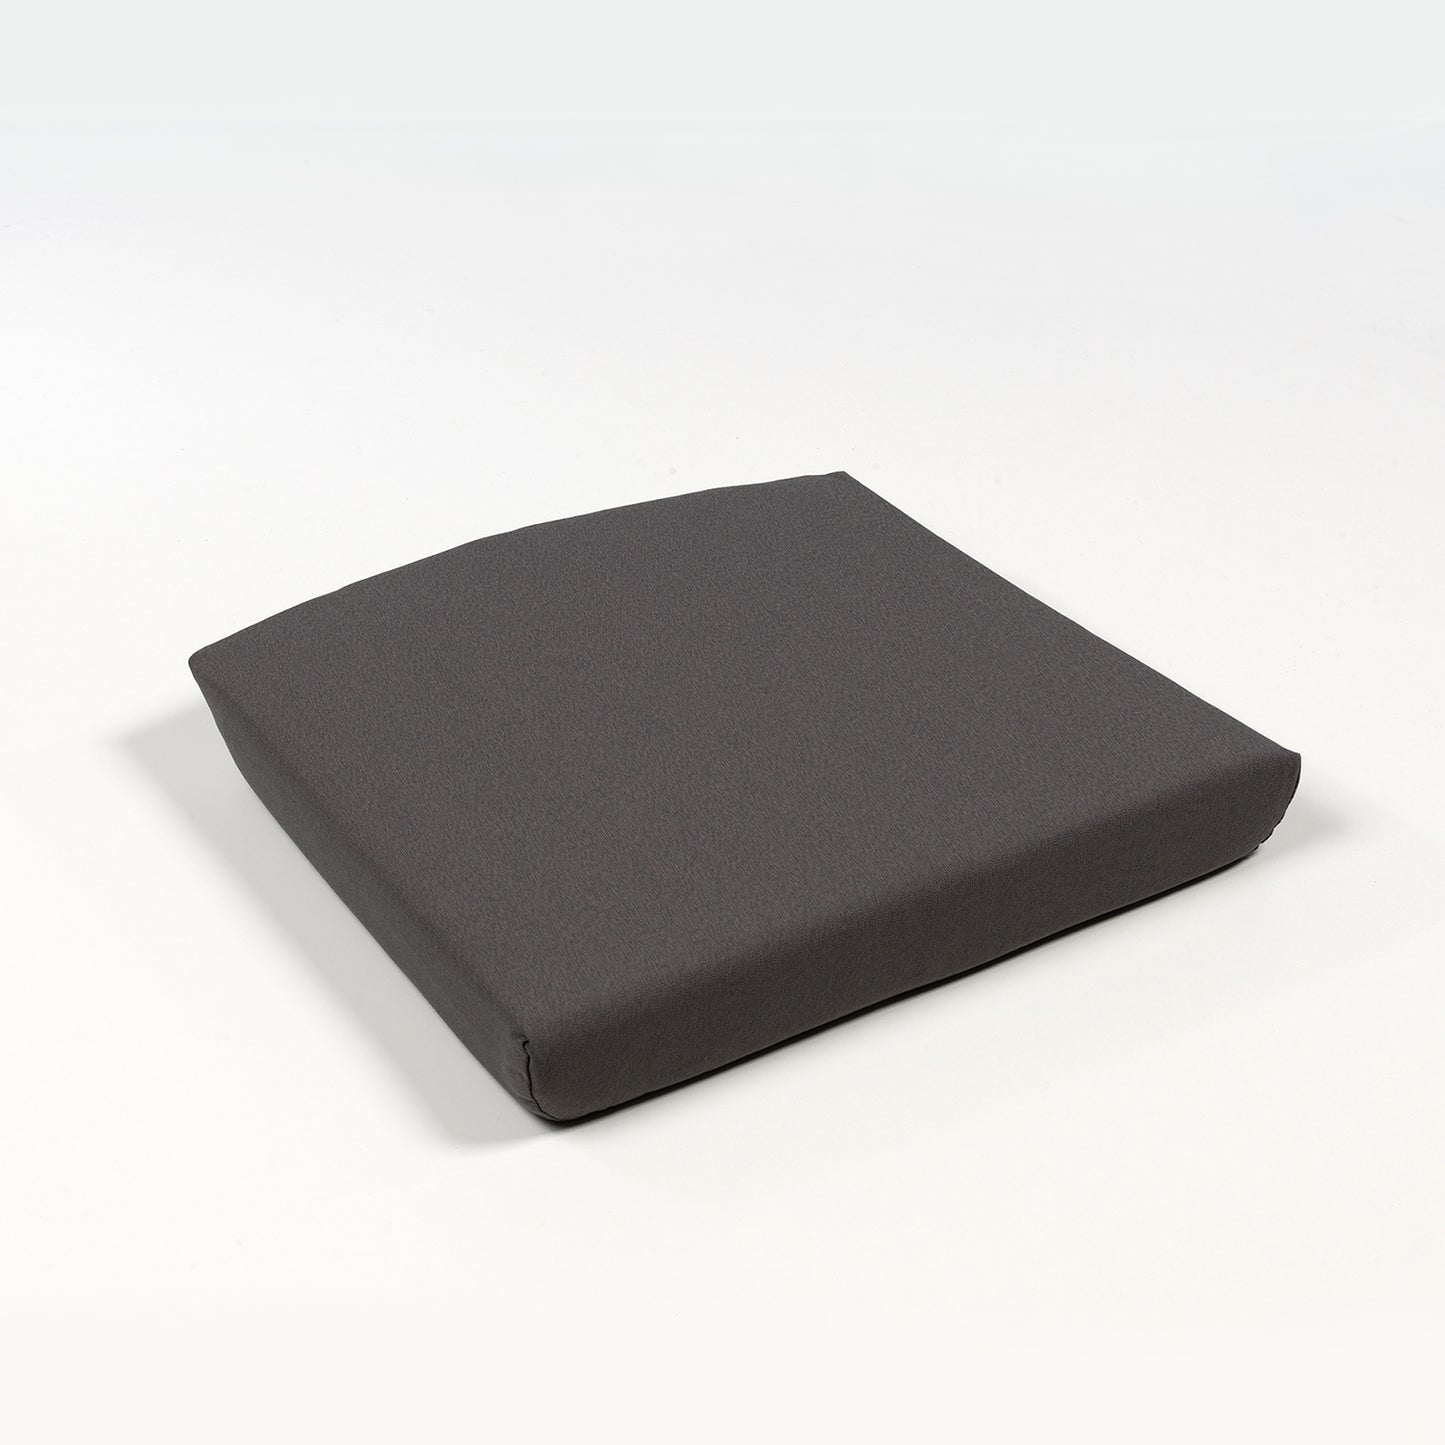 Net Relax Cushion In Grey Stone